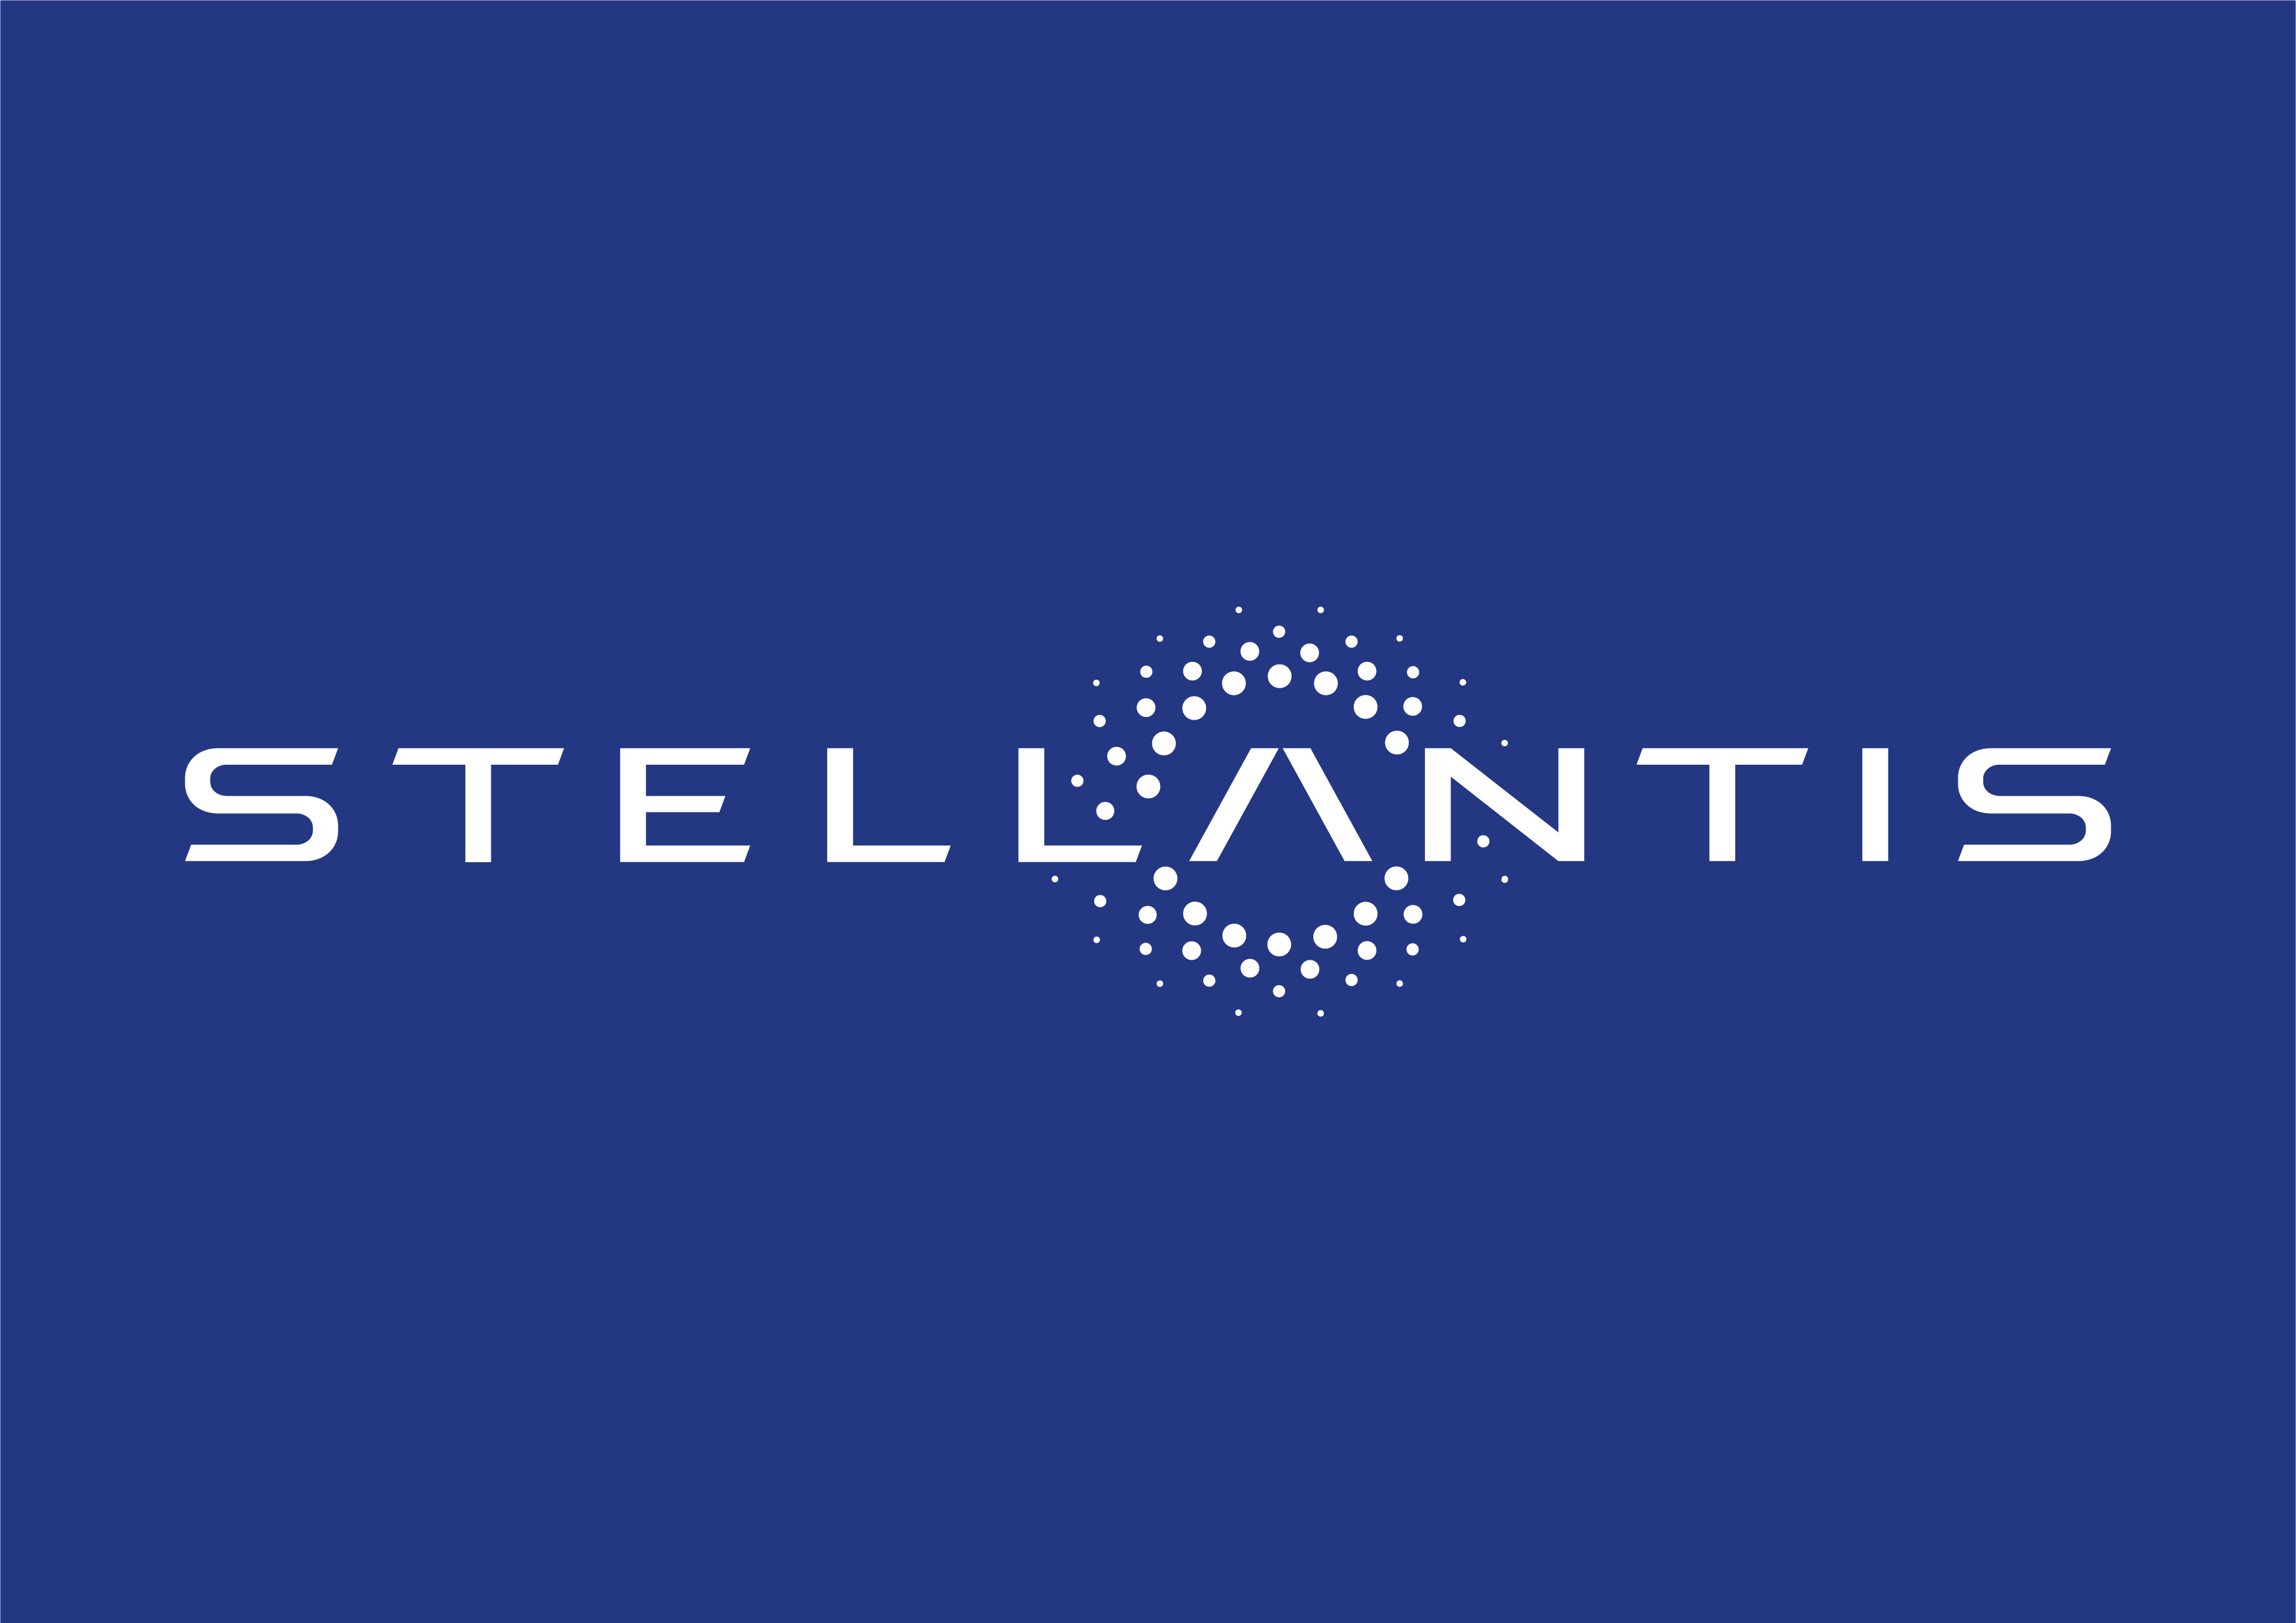 Stellantis_logo_blue_background-293628